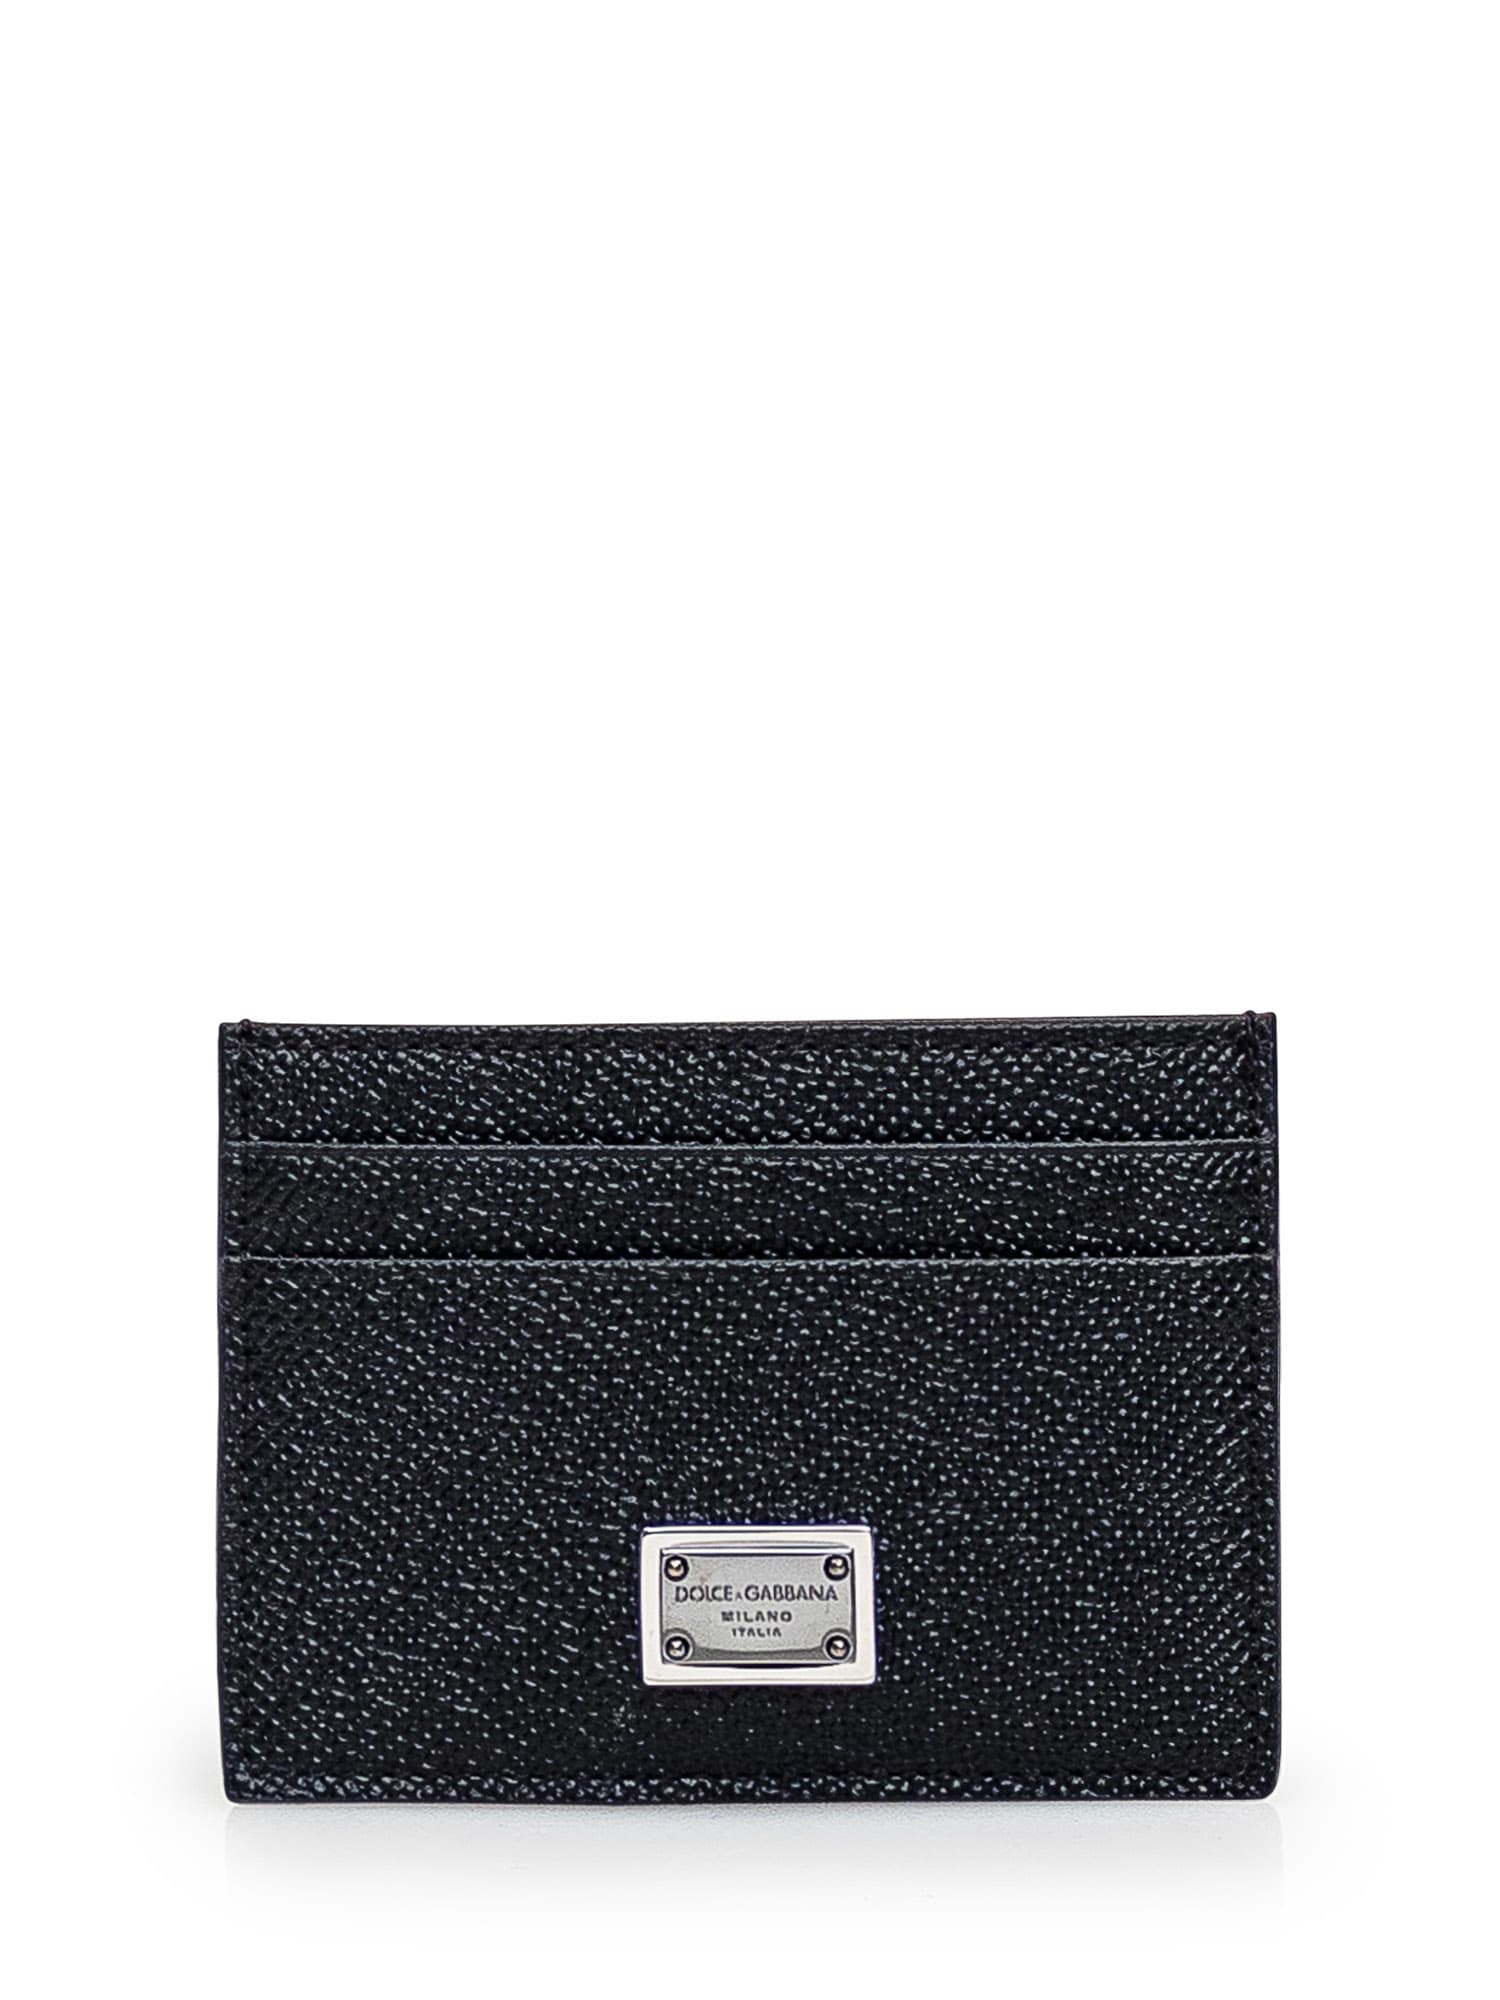 Dolce & Gabbana Leather Cardholder In Nero